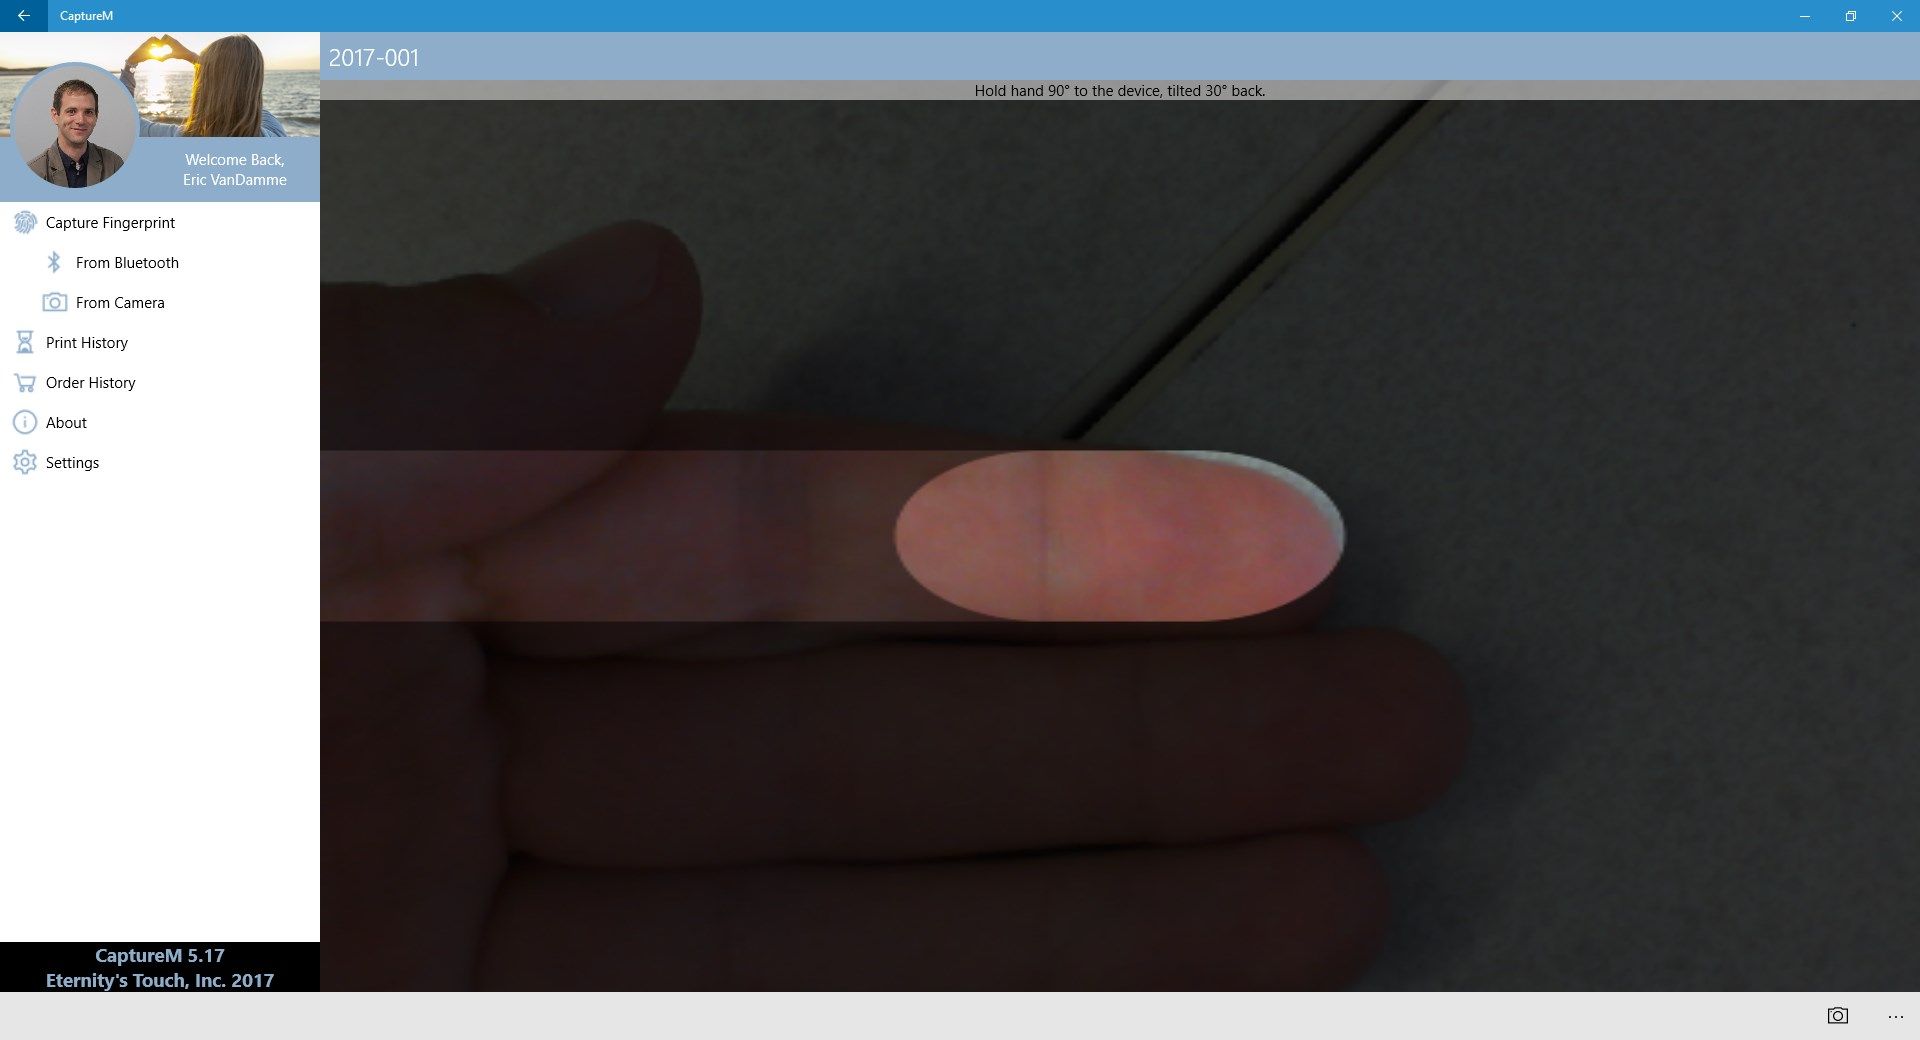 Fingerprint Capture using camera.